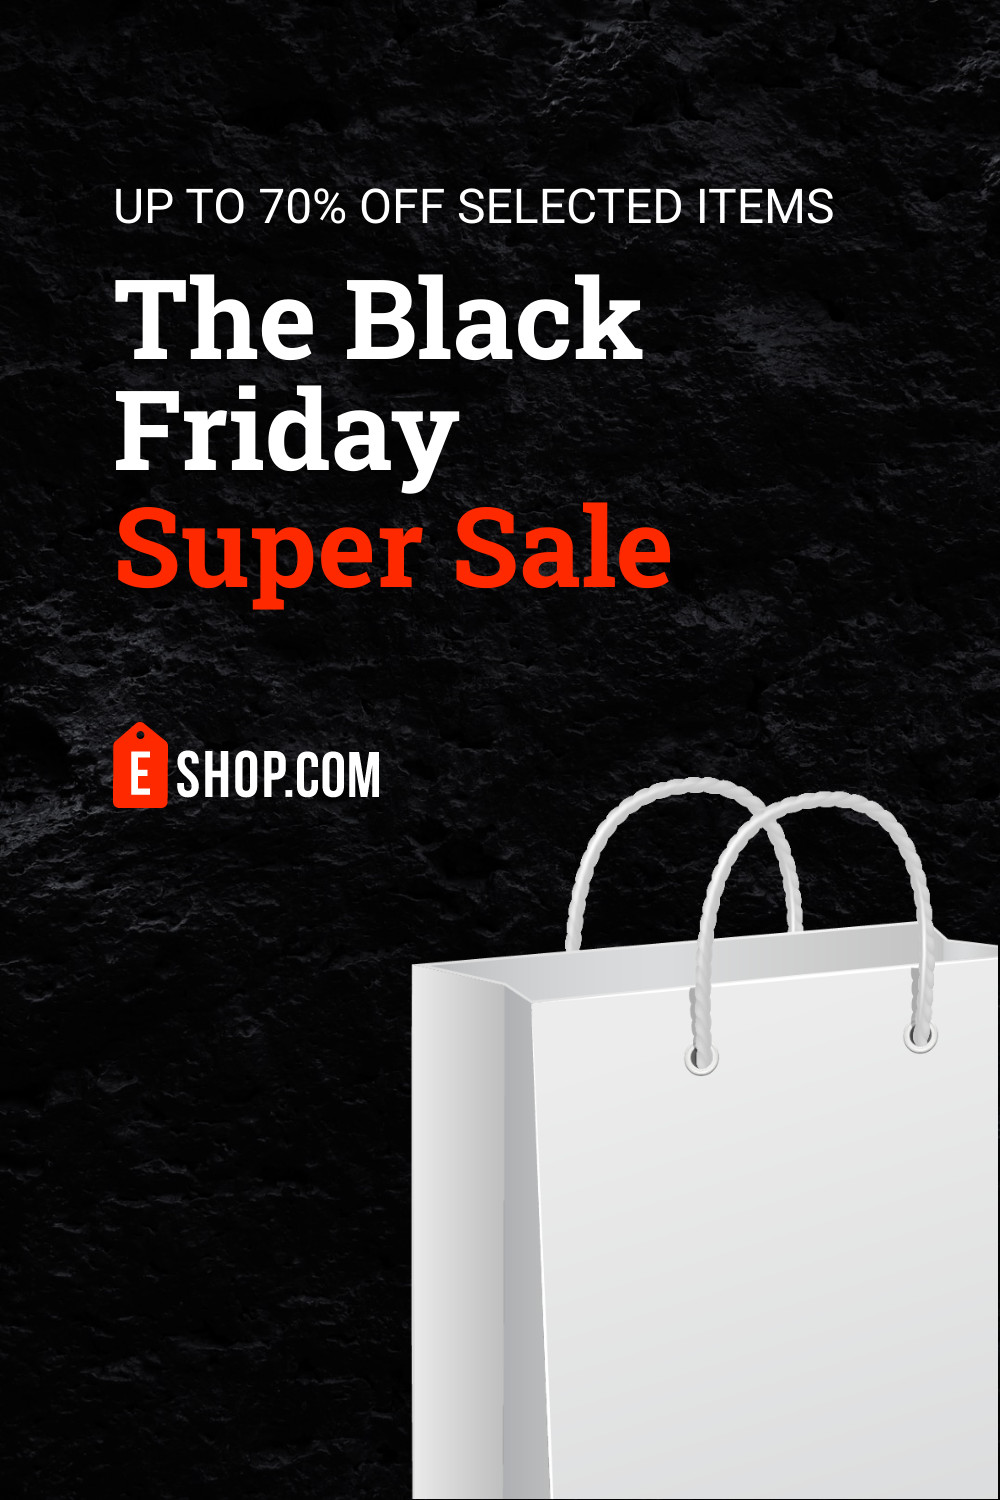 Black Friday White Bag Sale Inline Rectangle 300x250